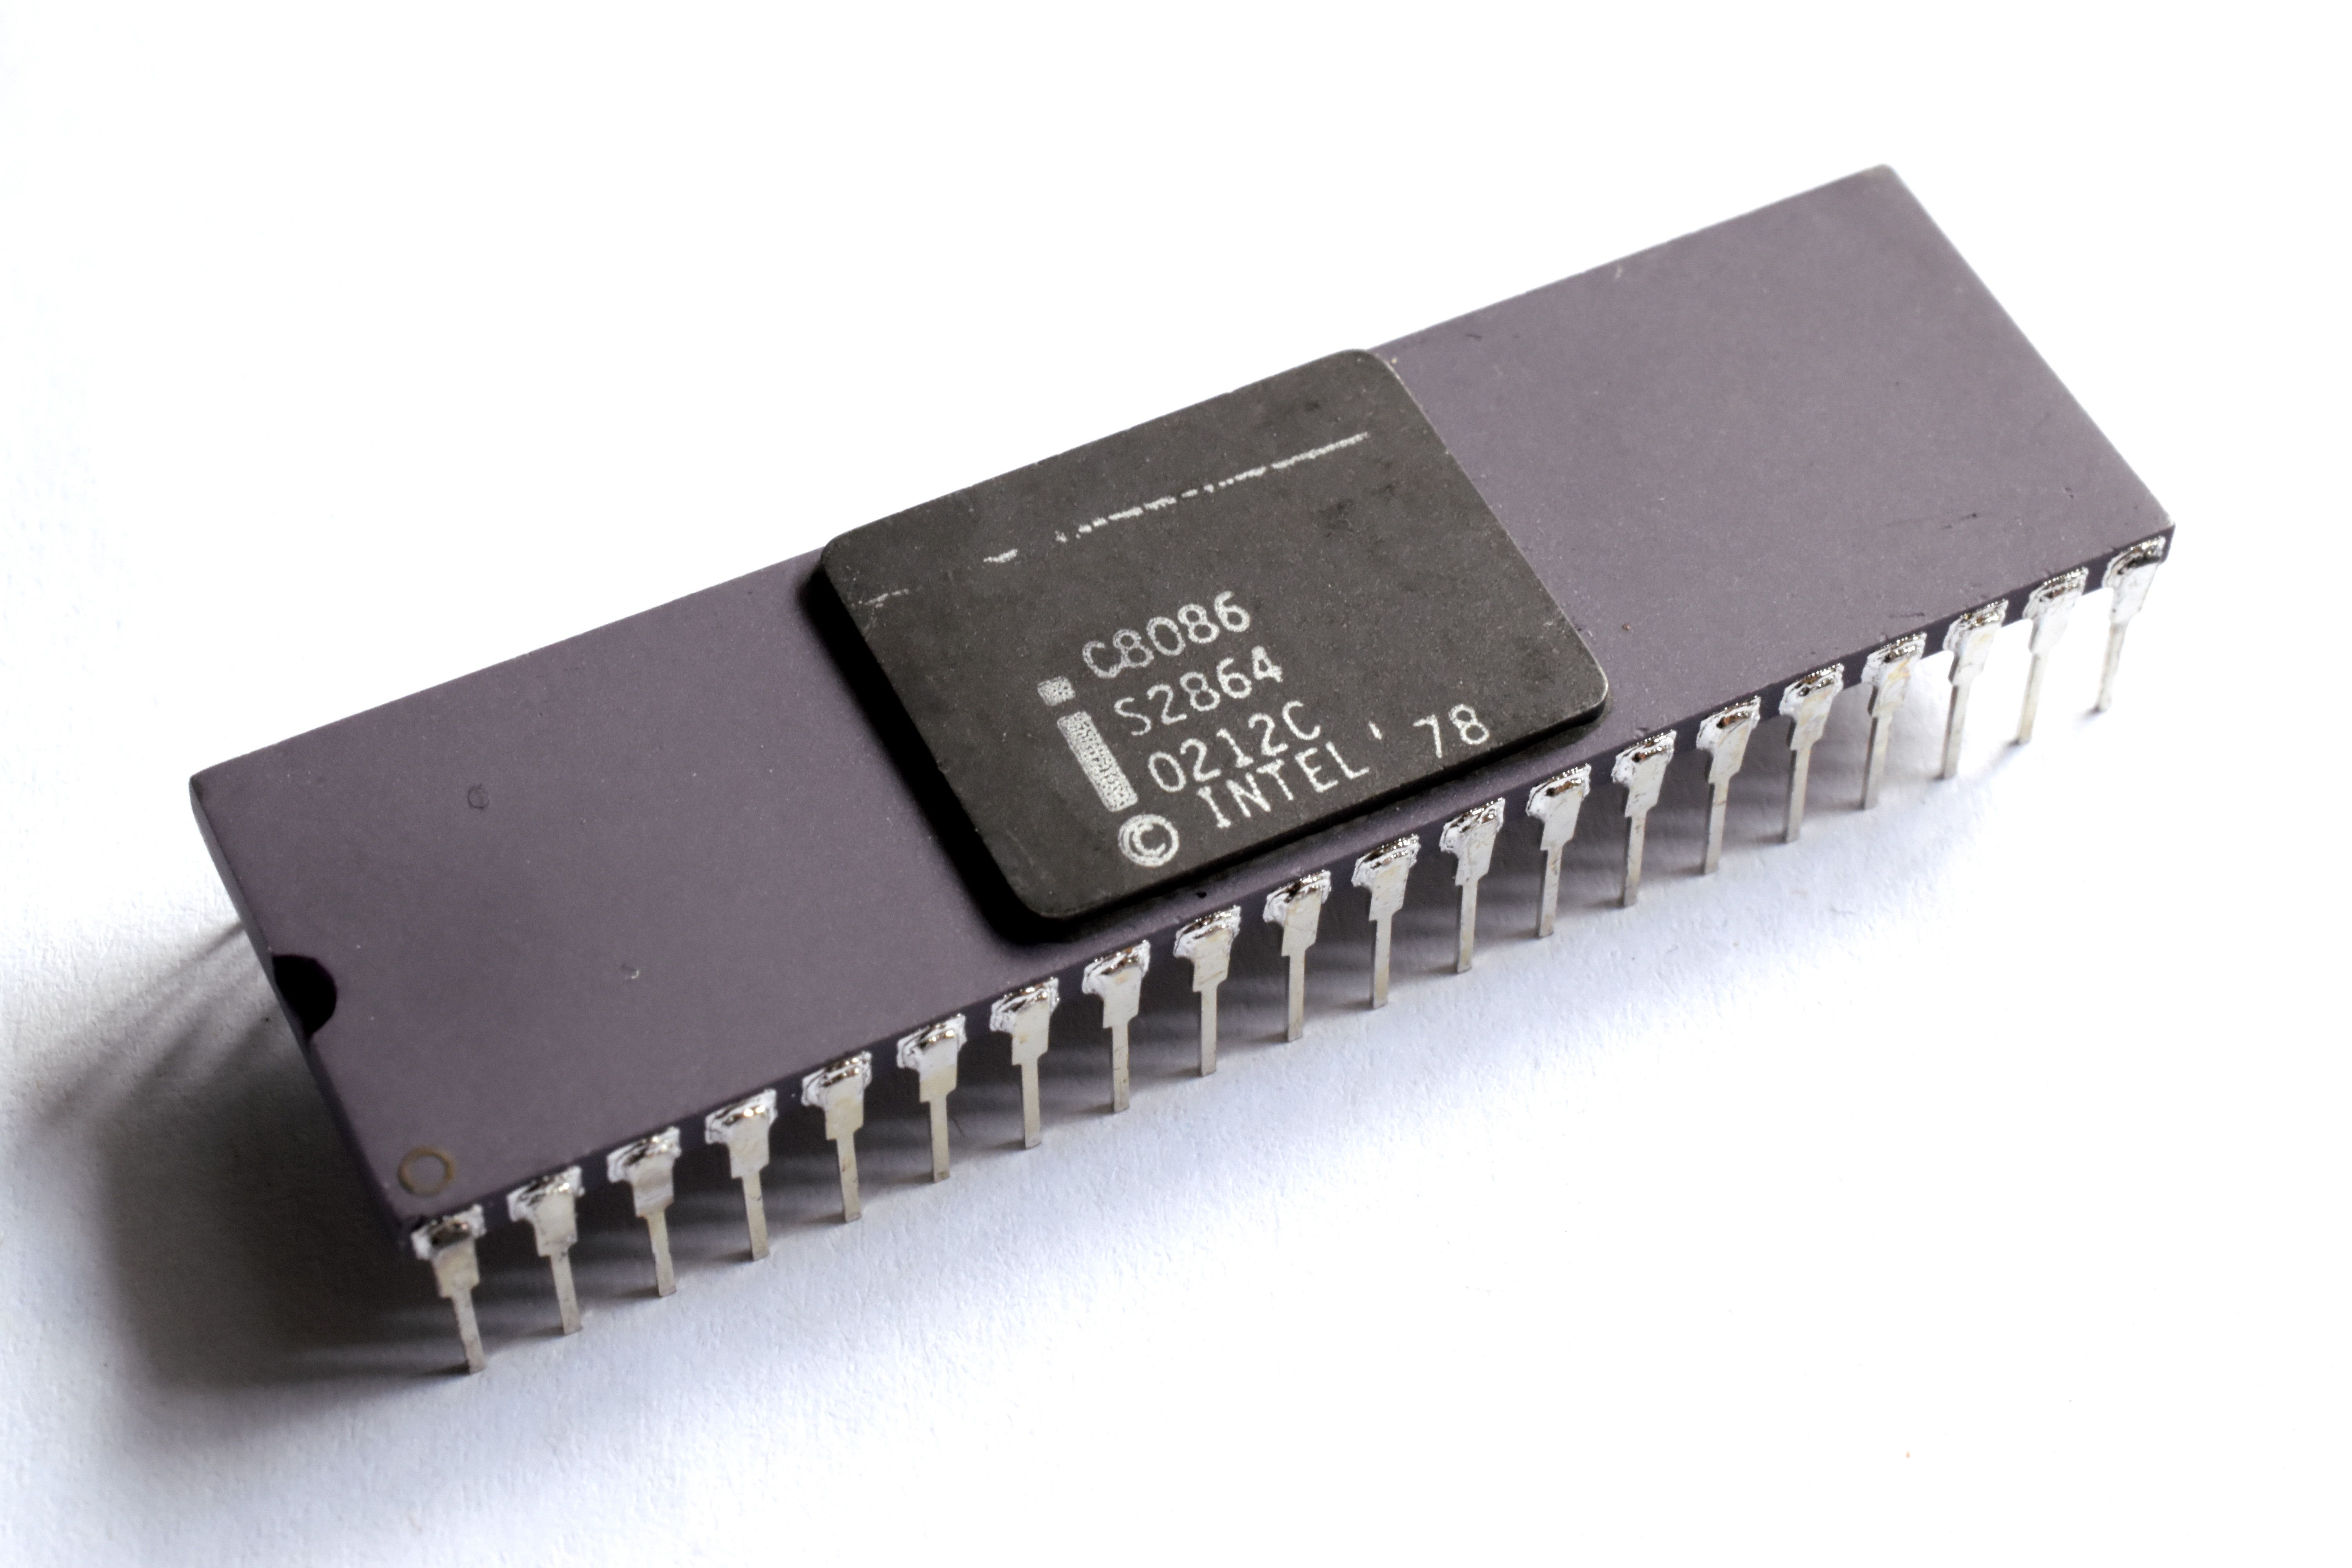 Intel 8086 microprocessor